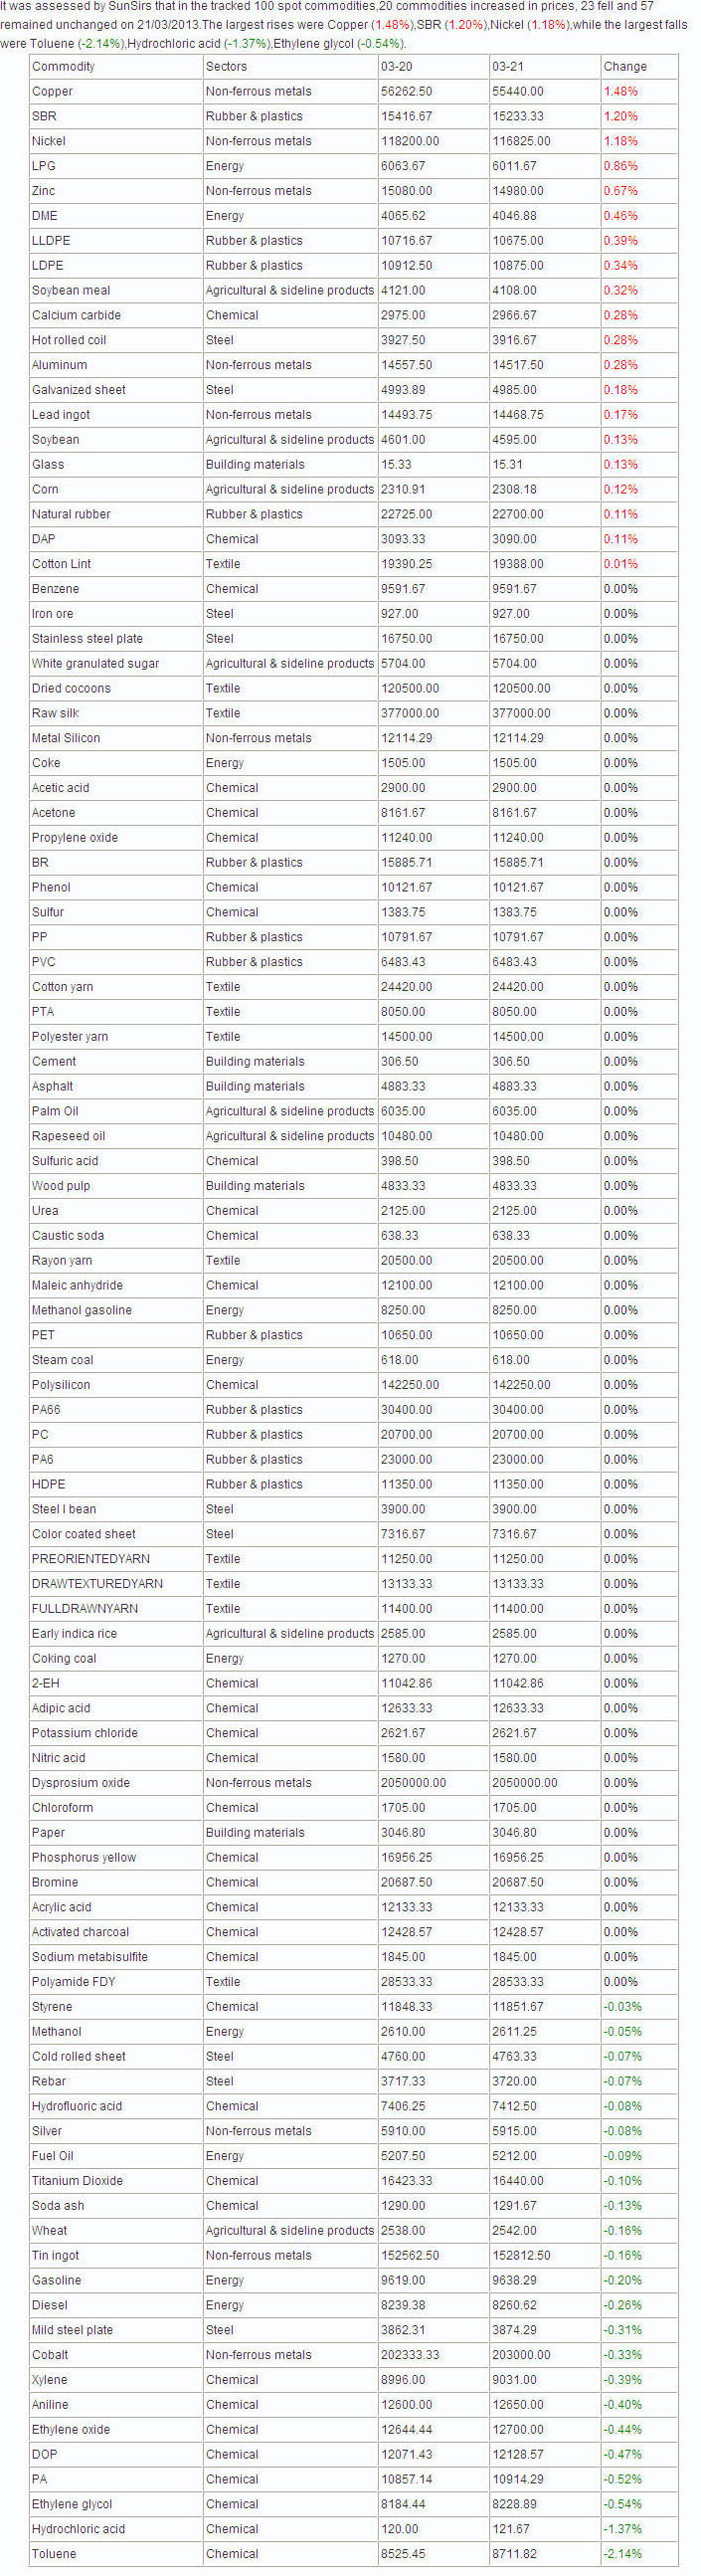 China 100 Spot Commodities Price Chart - 21/03/2013